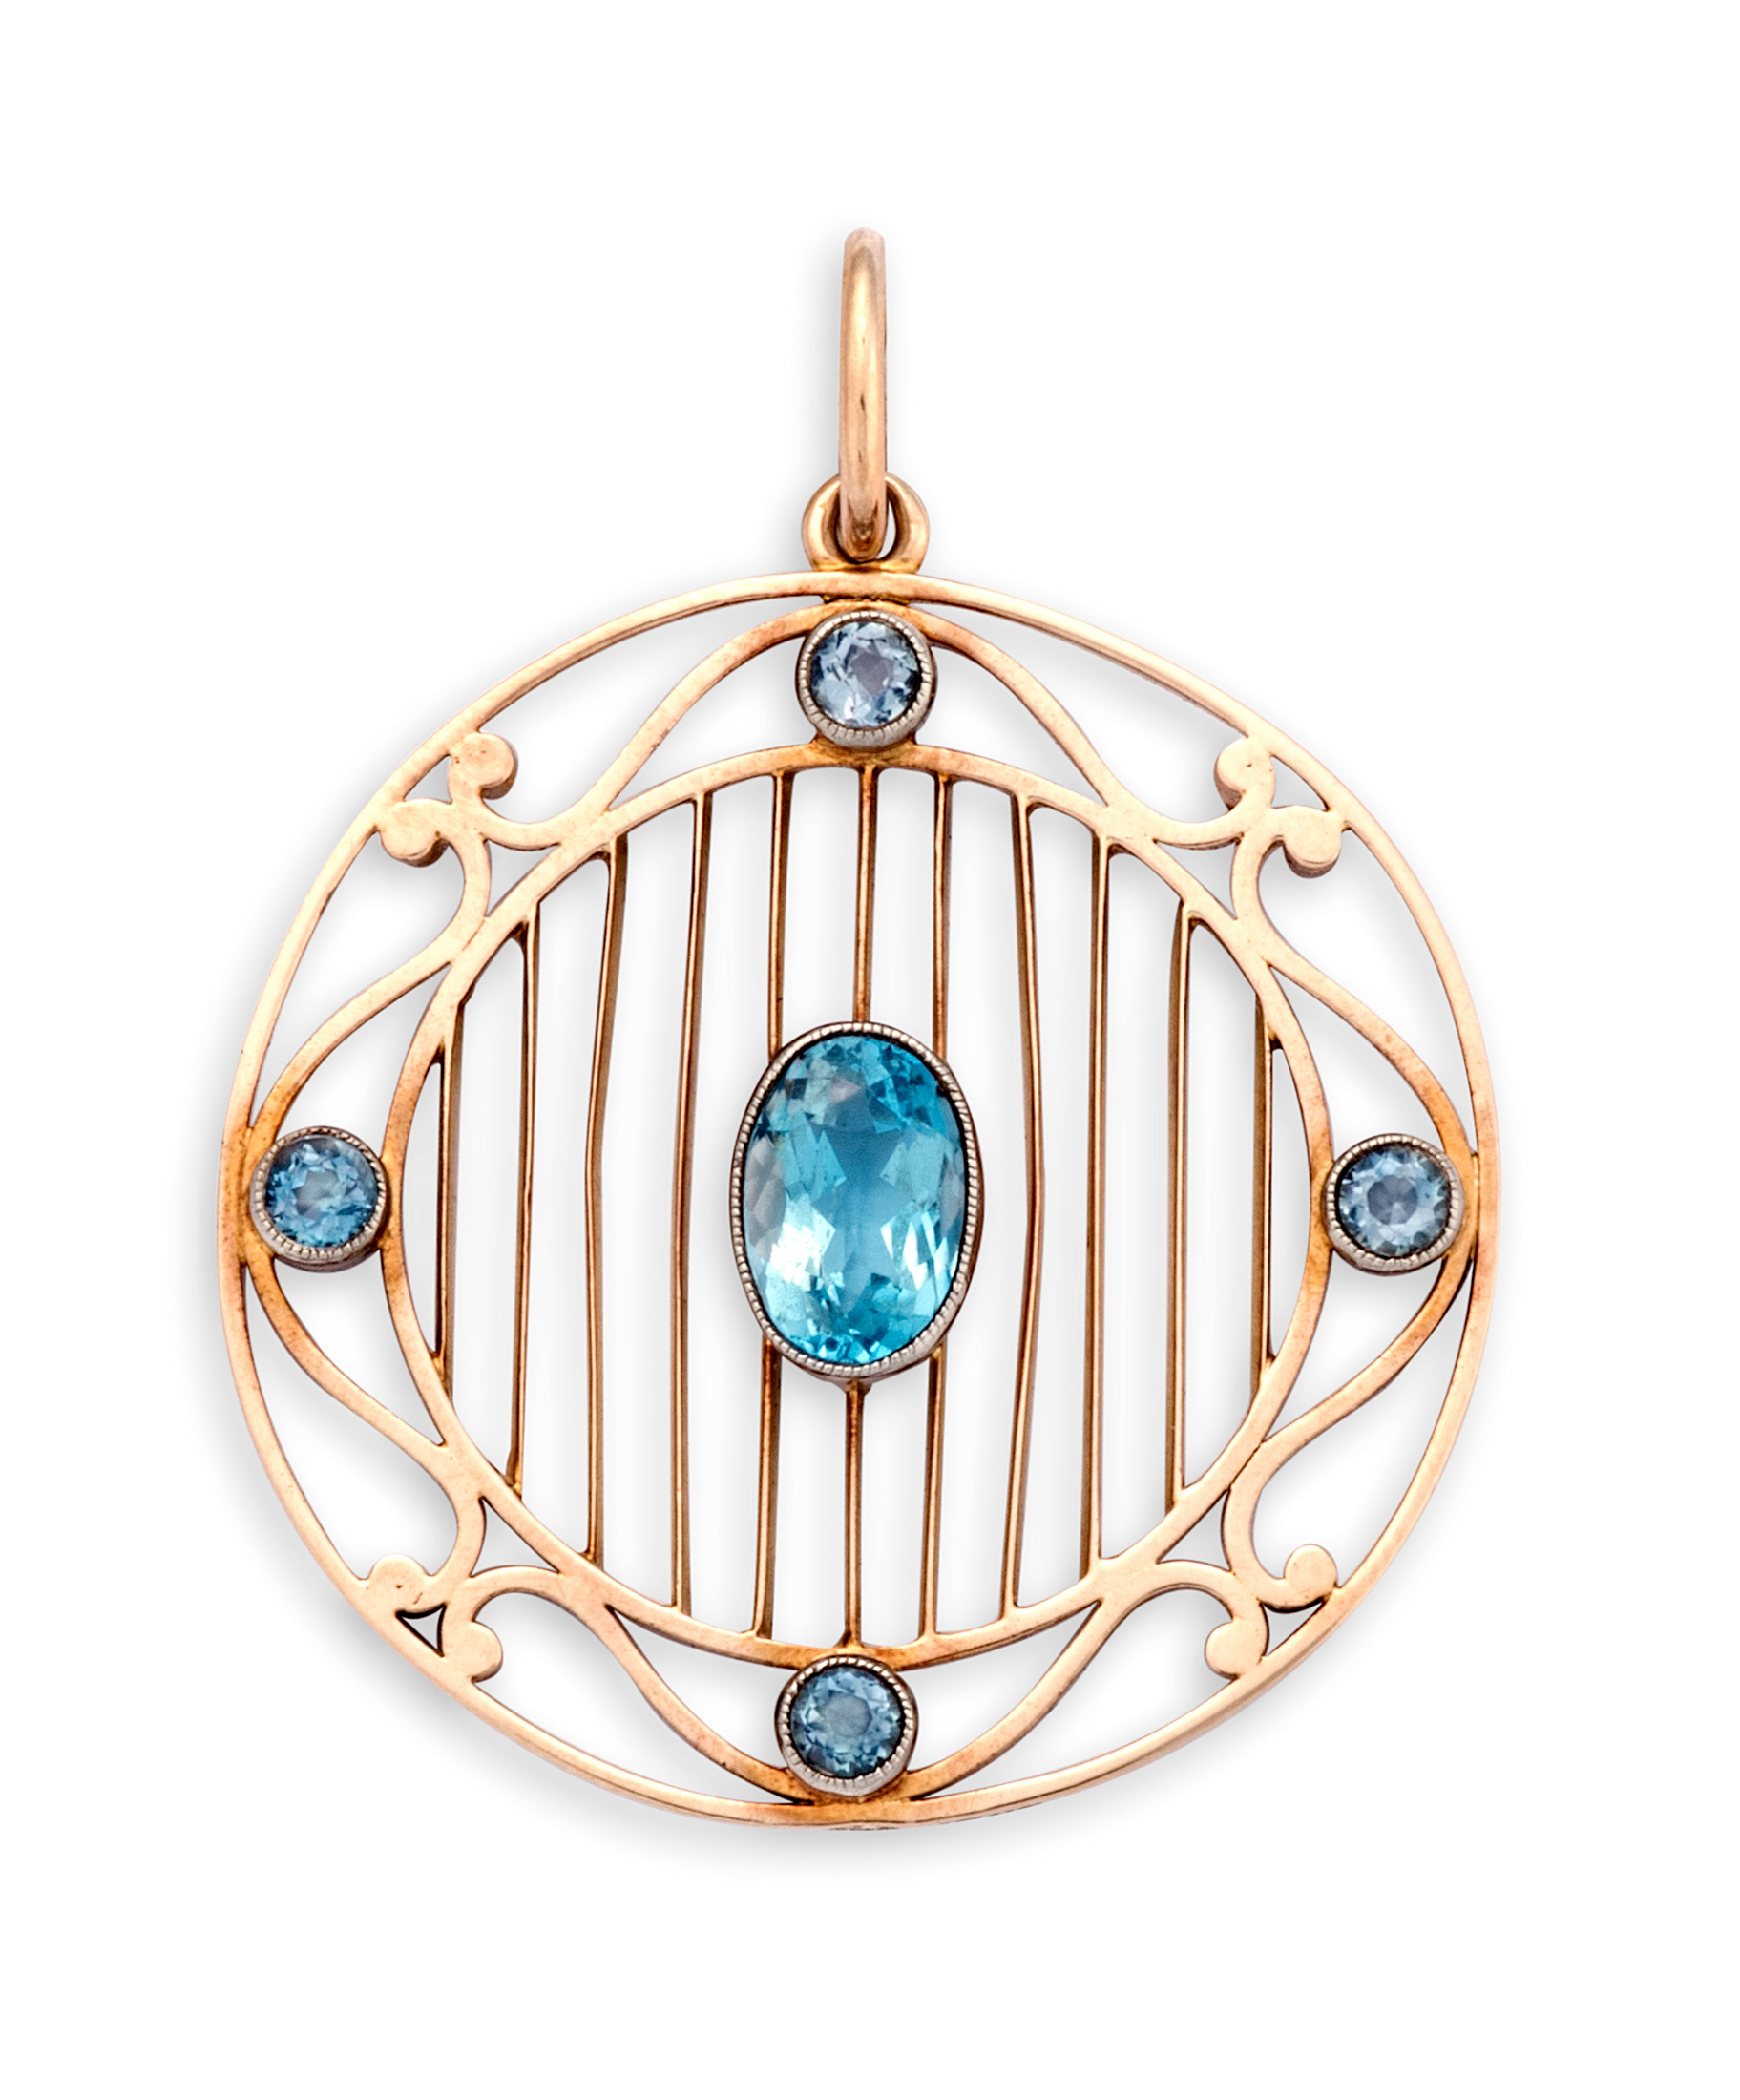 Edwardian rose gold and aquamarine pendant, Murrle, Bennett & Co, 1896-1914